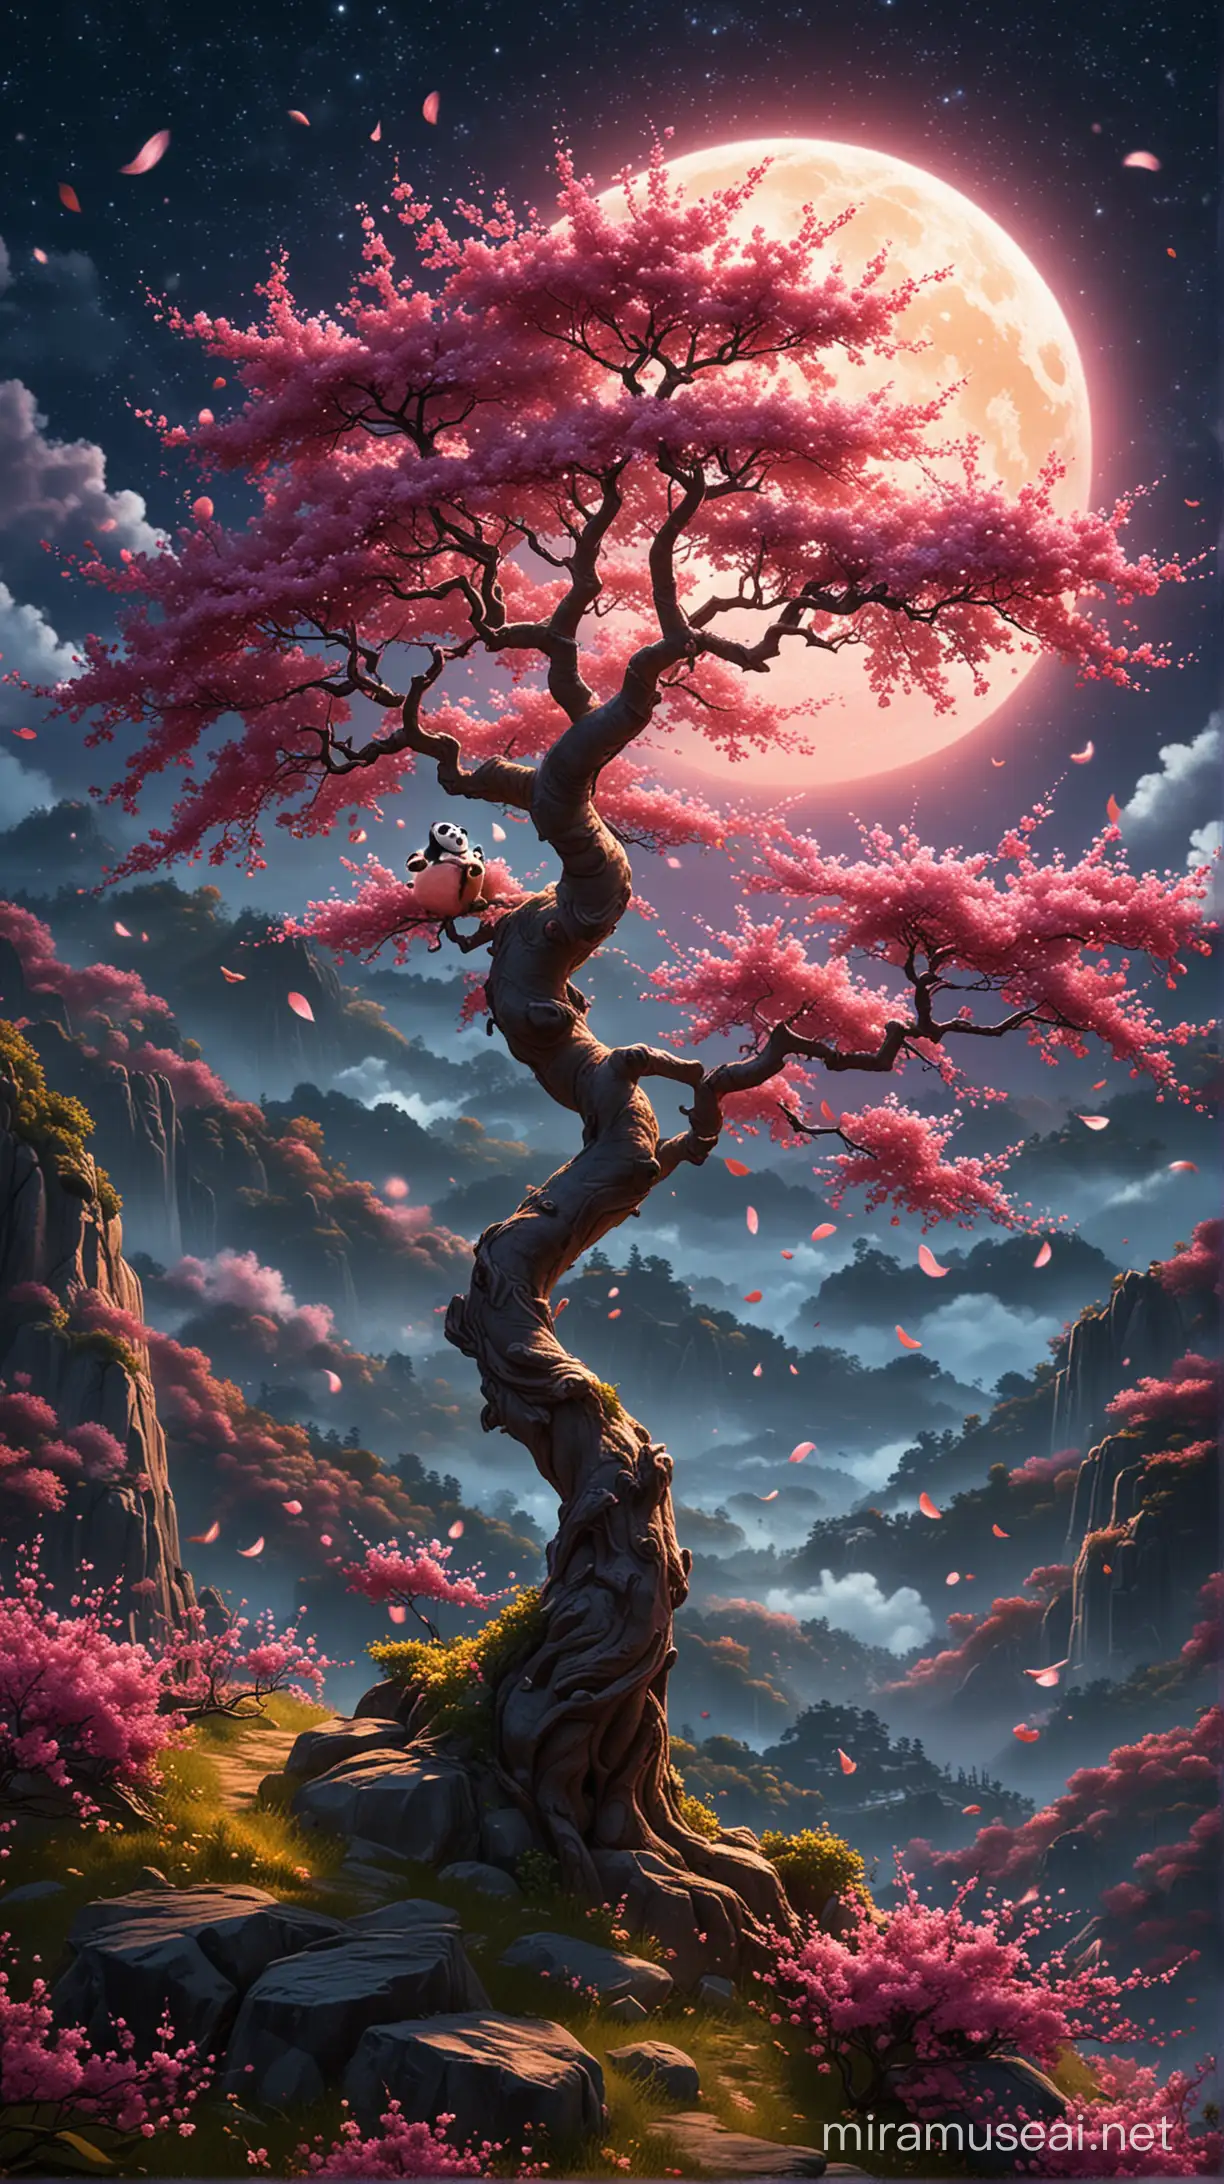 Mystical Peach Tree of Heavenly Wisdom at Night